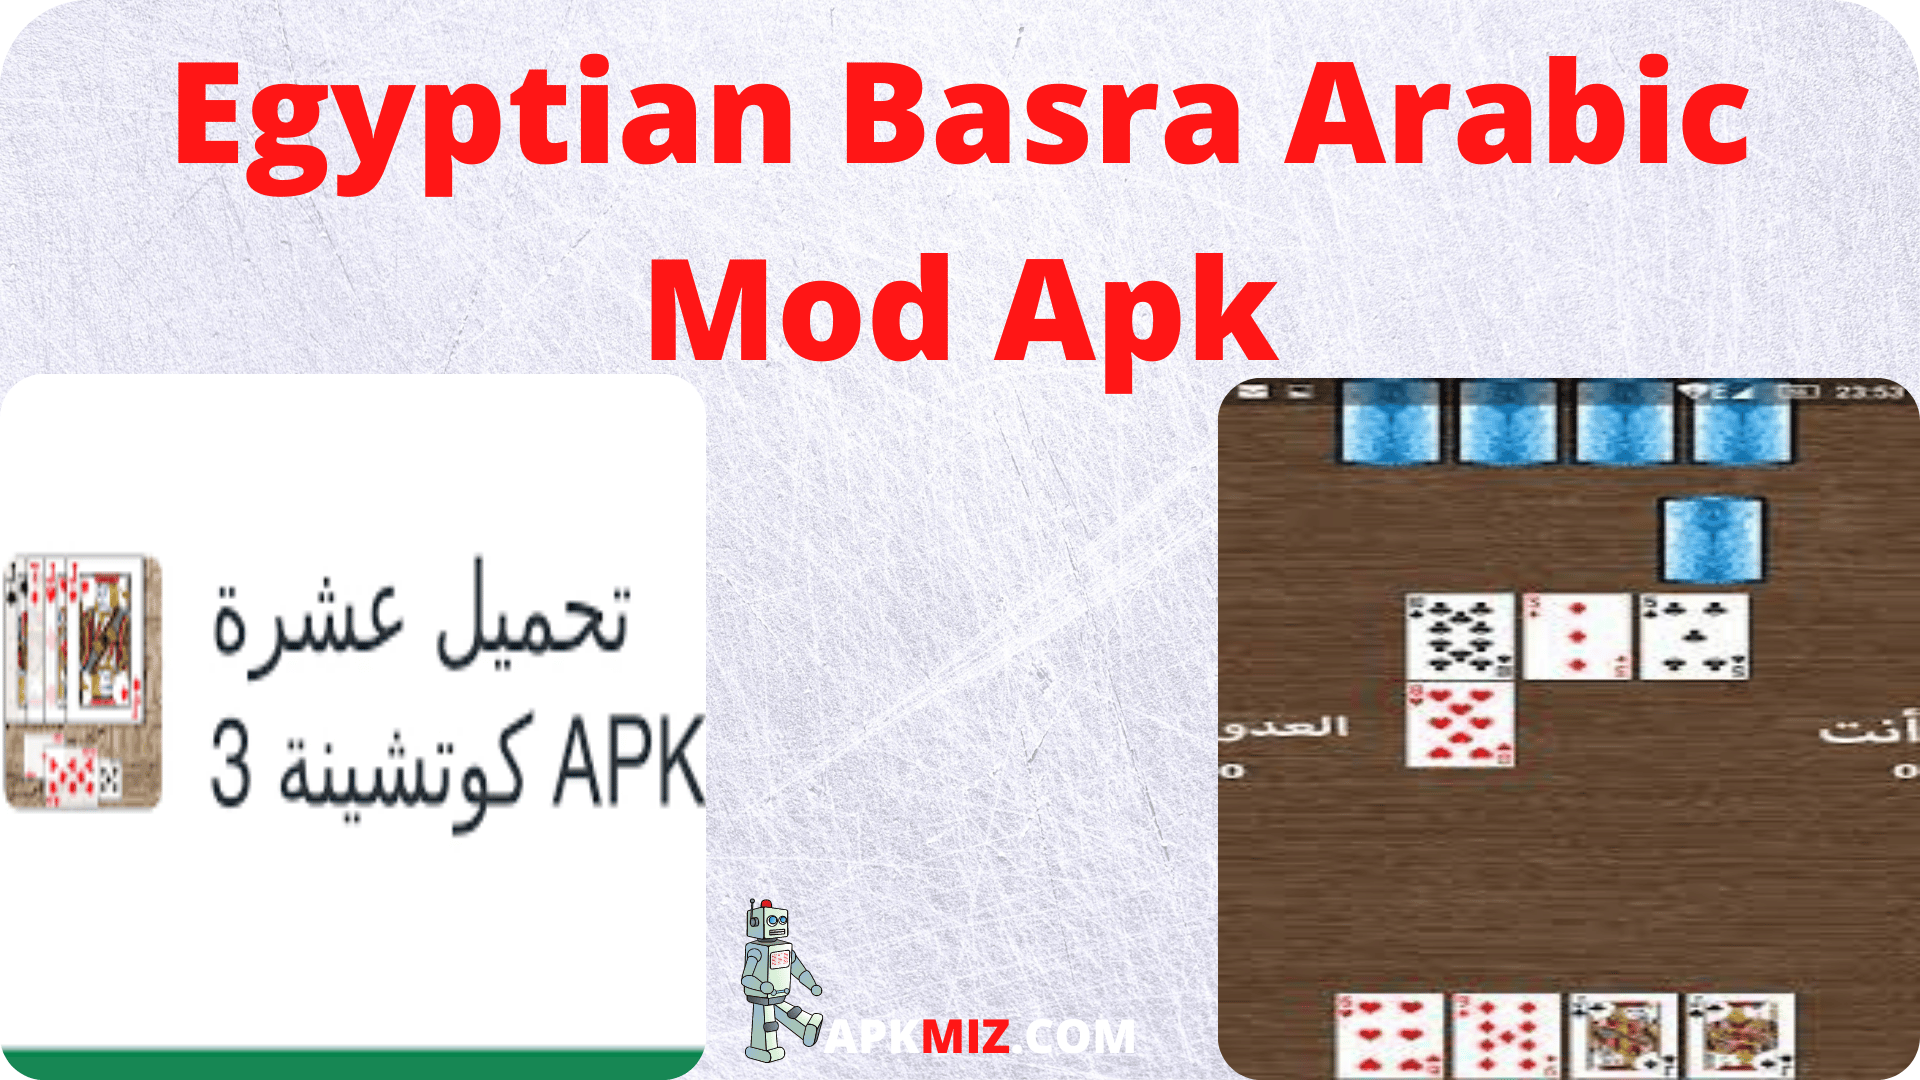 Egyptian Basra Arabic Mod Apk